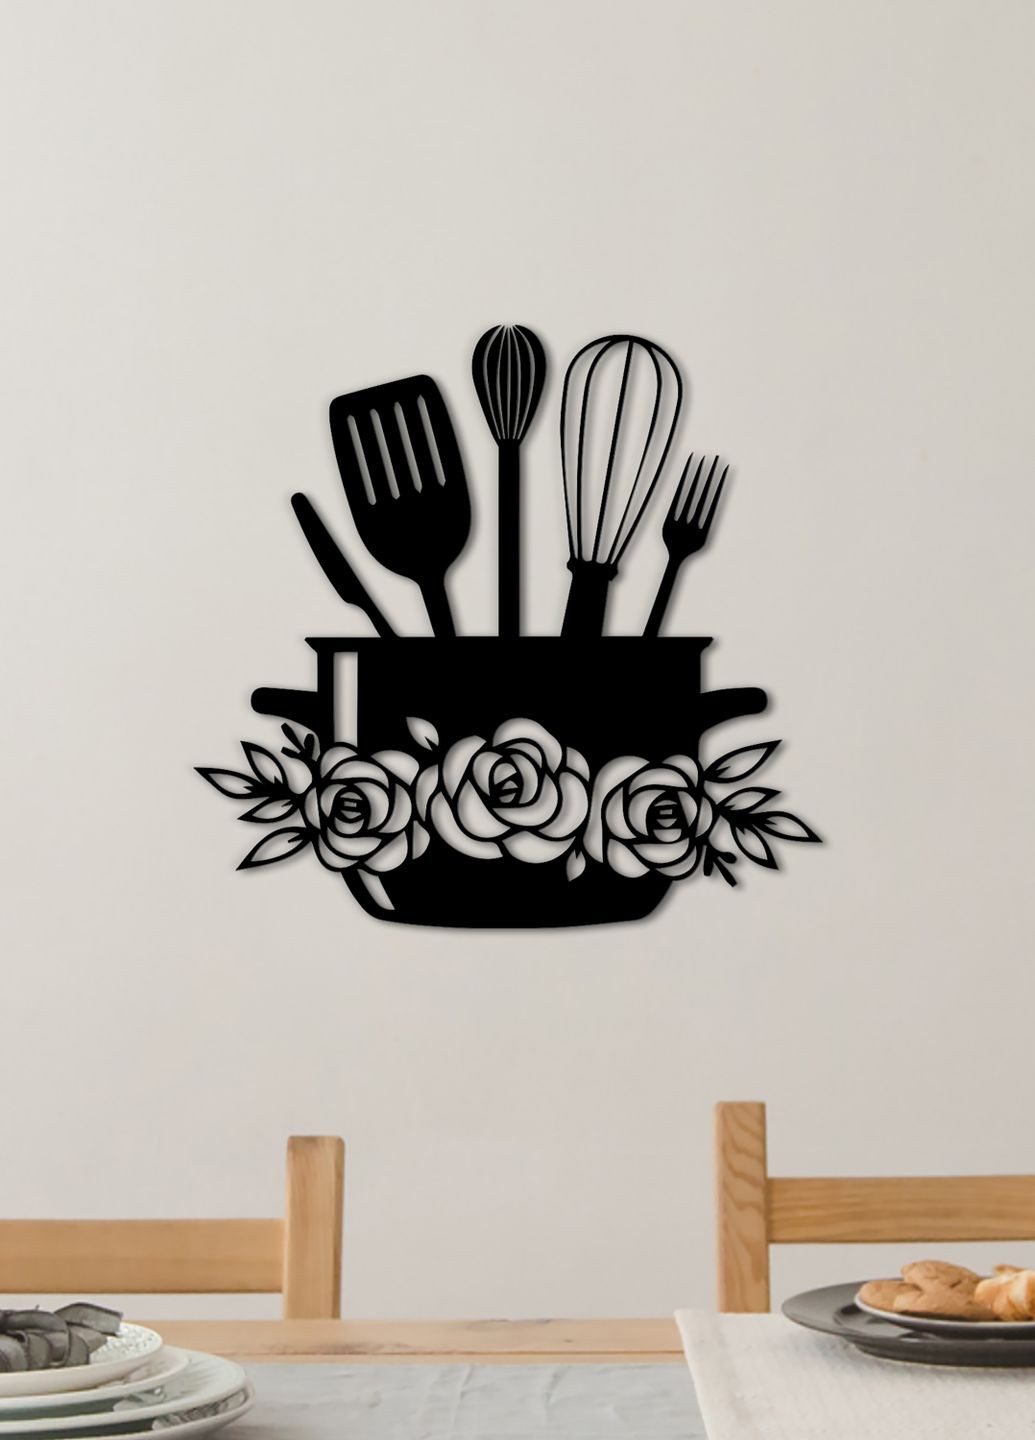 Современная картина на кухню, деревянный декор для дома "Кастрюля хозяйки", декоративное панно 20х20 см Woodyard (292013461)